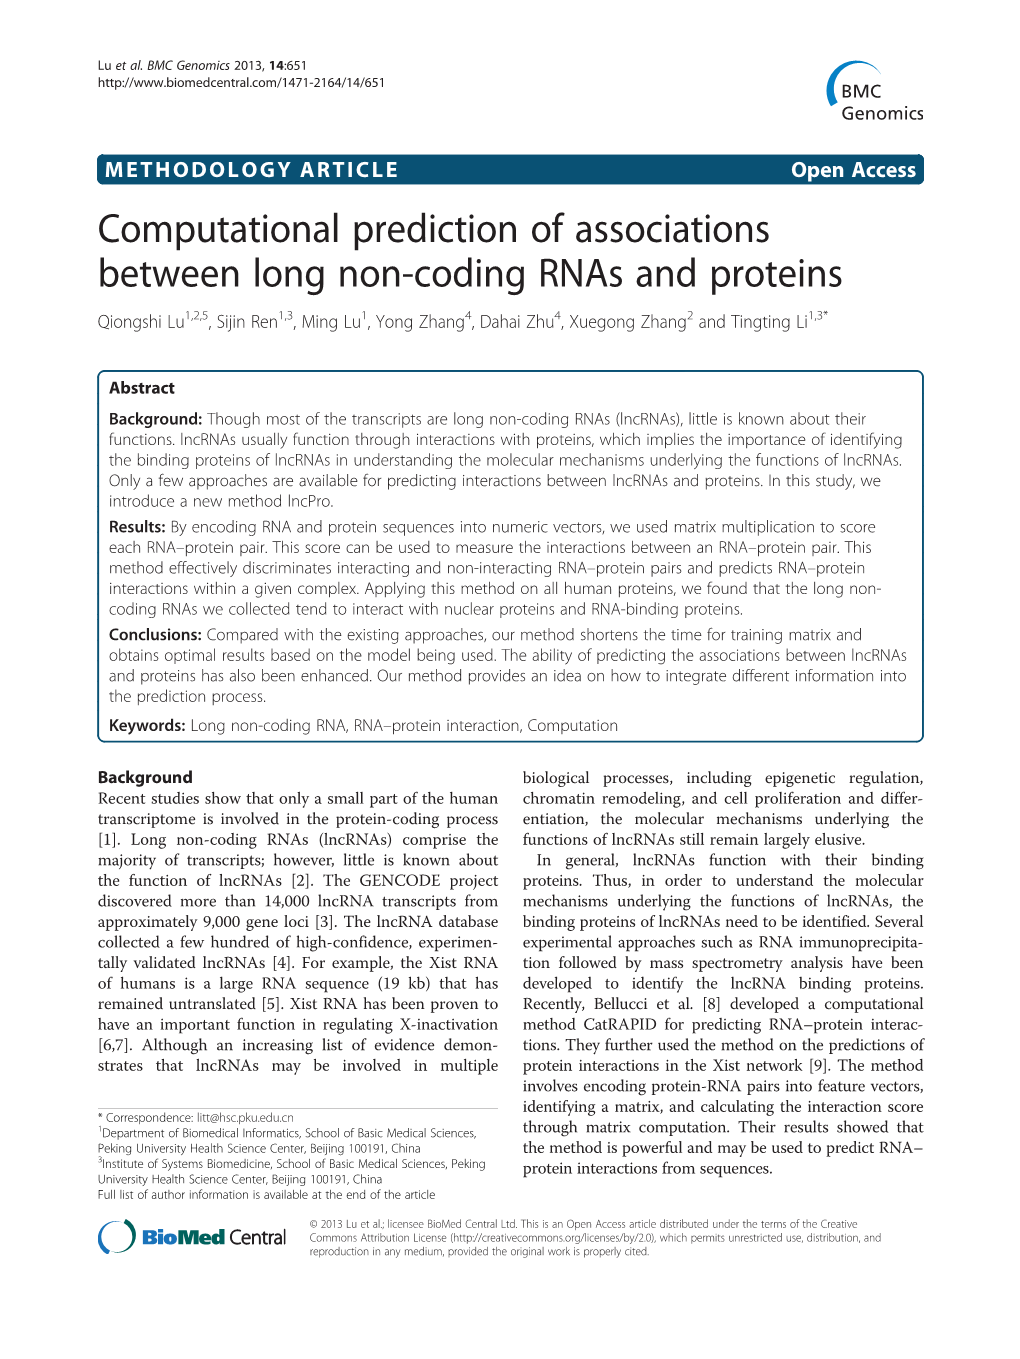 Computational Prediction of Associations Between Long Non